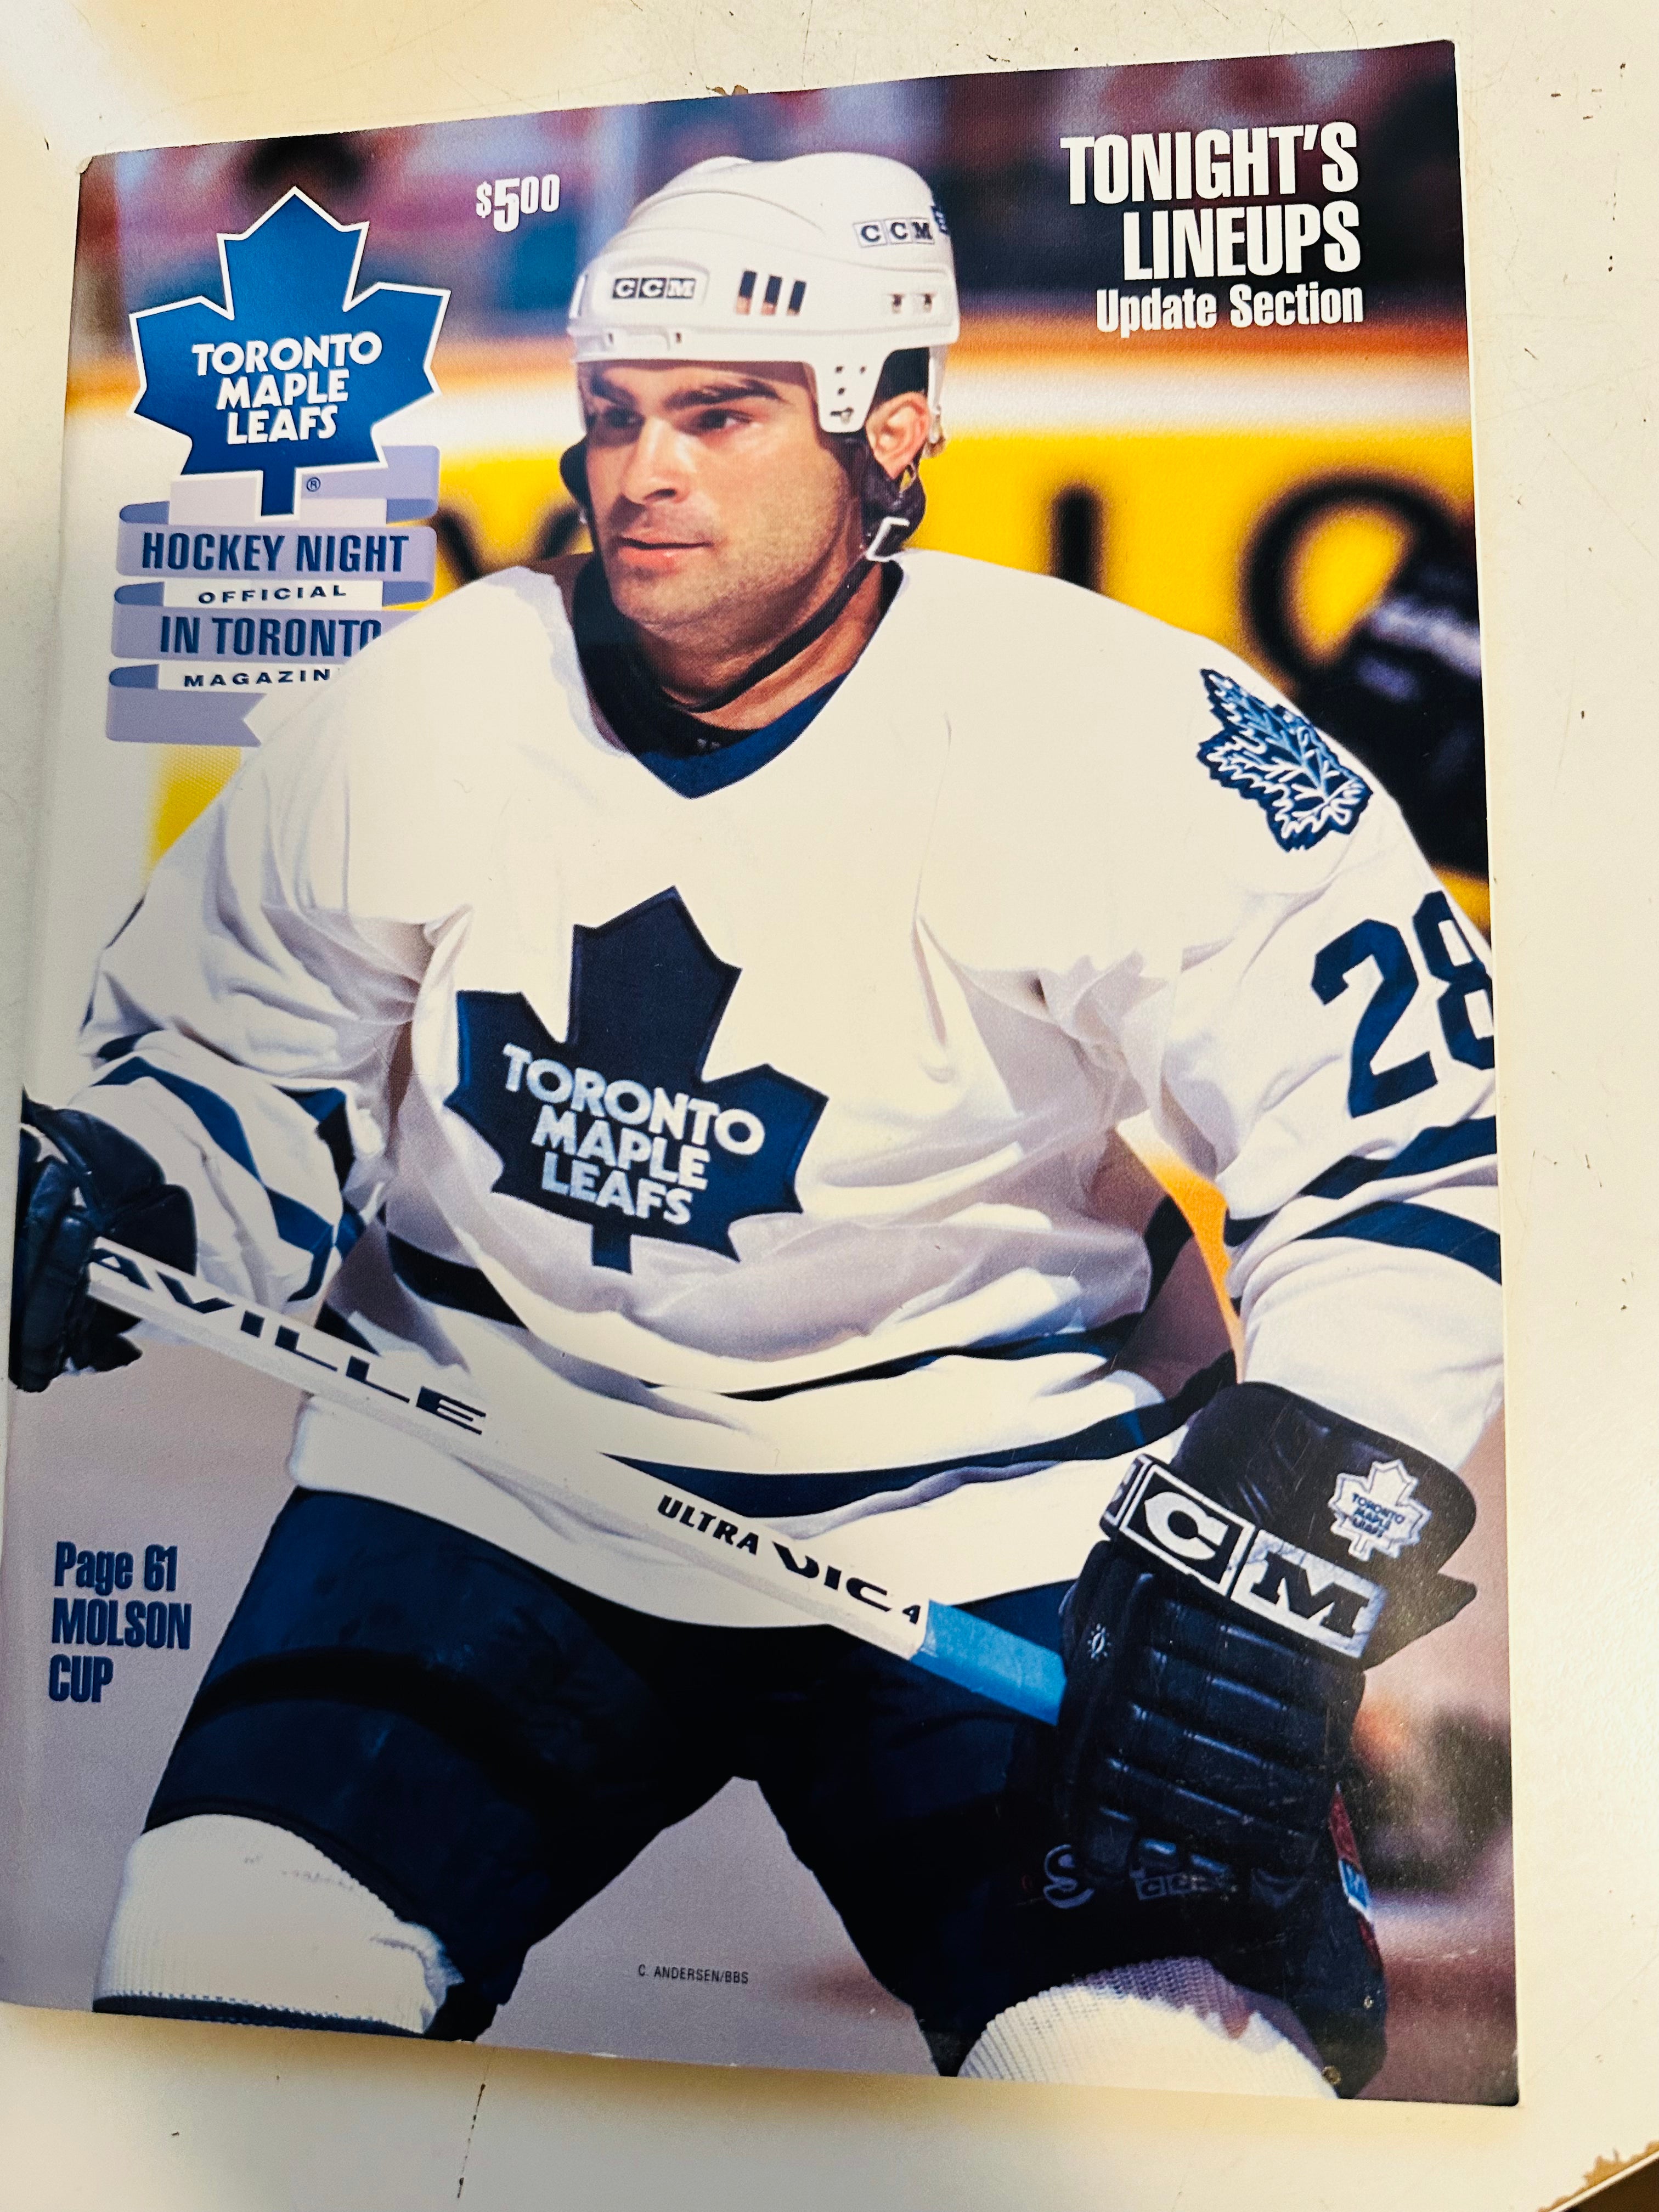 Toronto Maple Leafs vintage program with ticket 1995